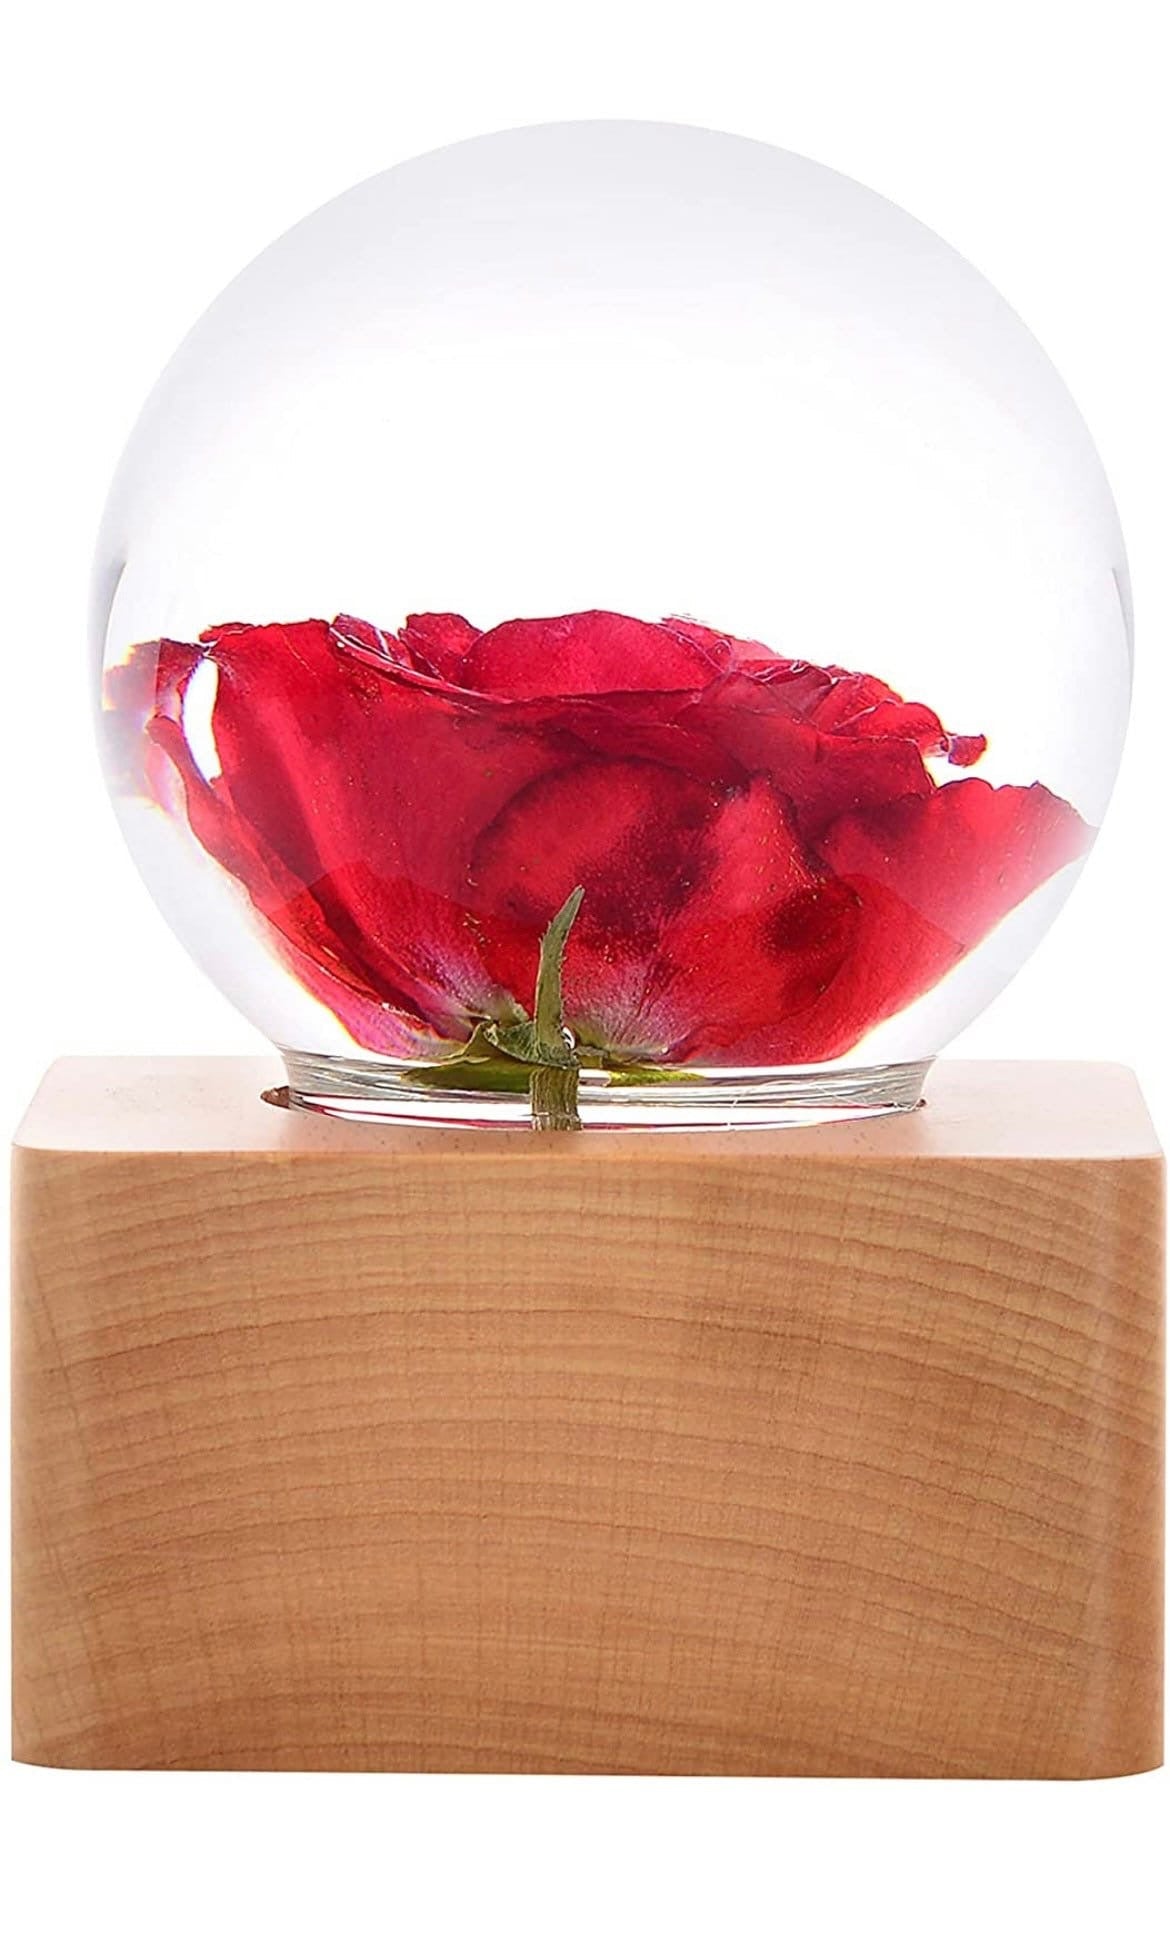 MISS LI Garden Rose Forever Flowers | Valentine | 3D Crystal Ball | LED Lights | Personalized | Custom Text | Custom Image | Laser Engraved